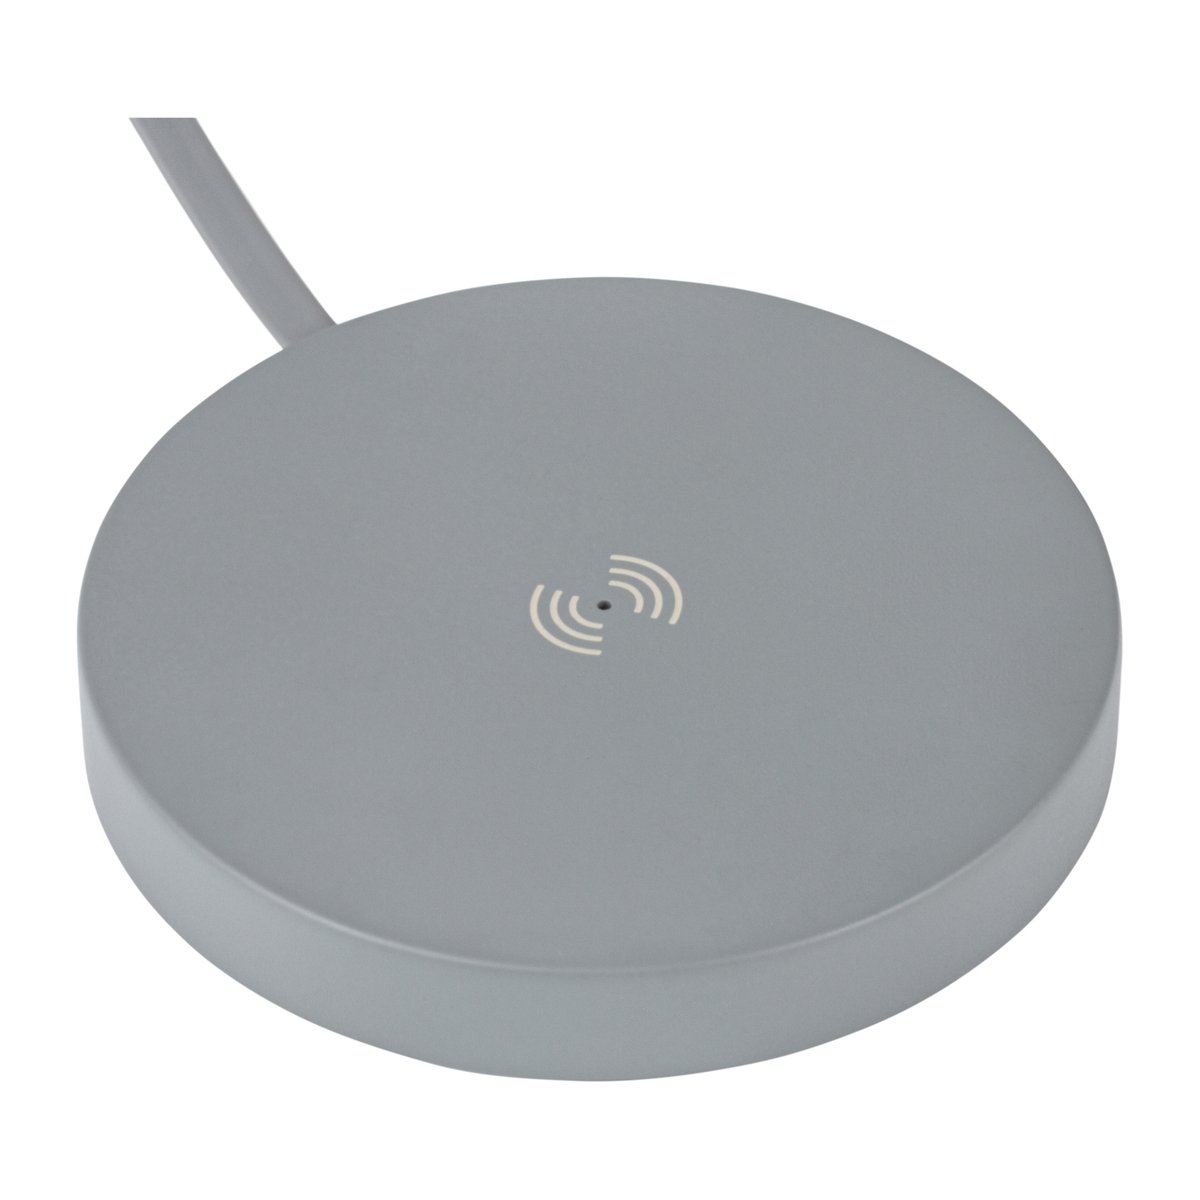 Wireless charger REEVES-DENTON grey 5 Watt